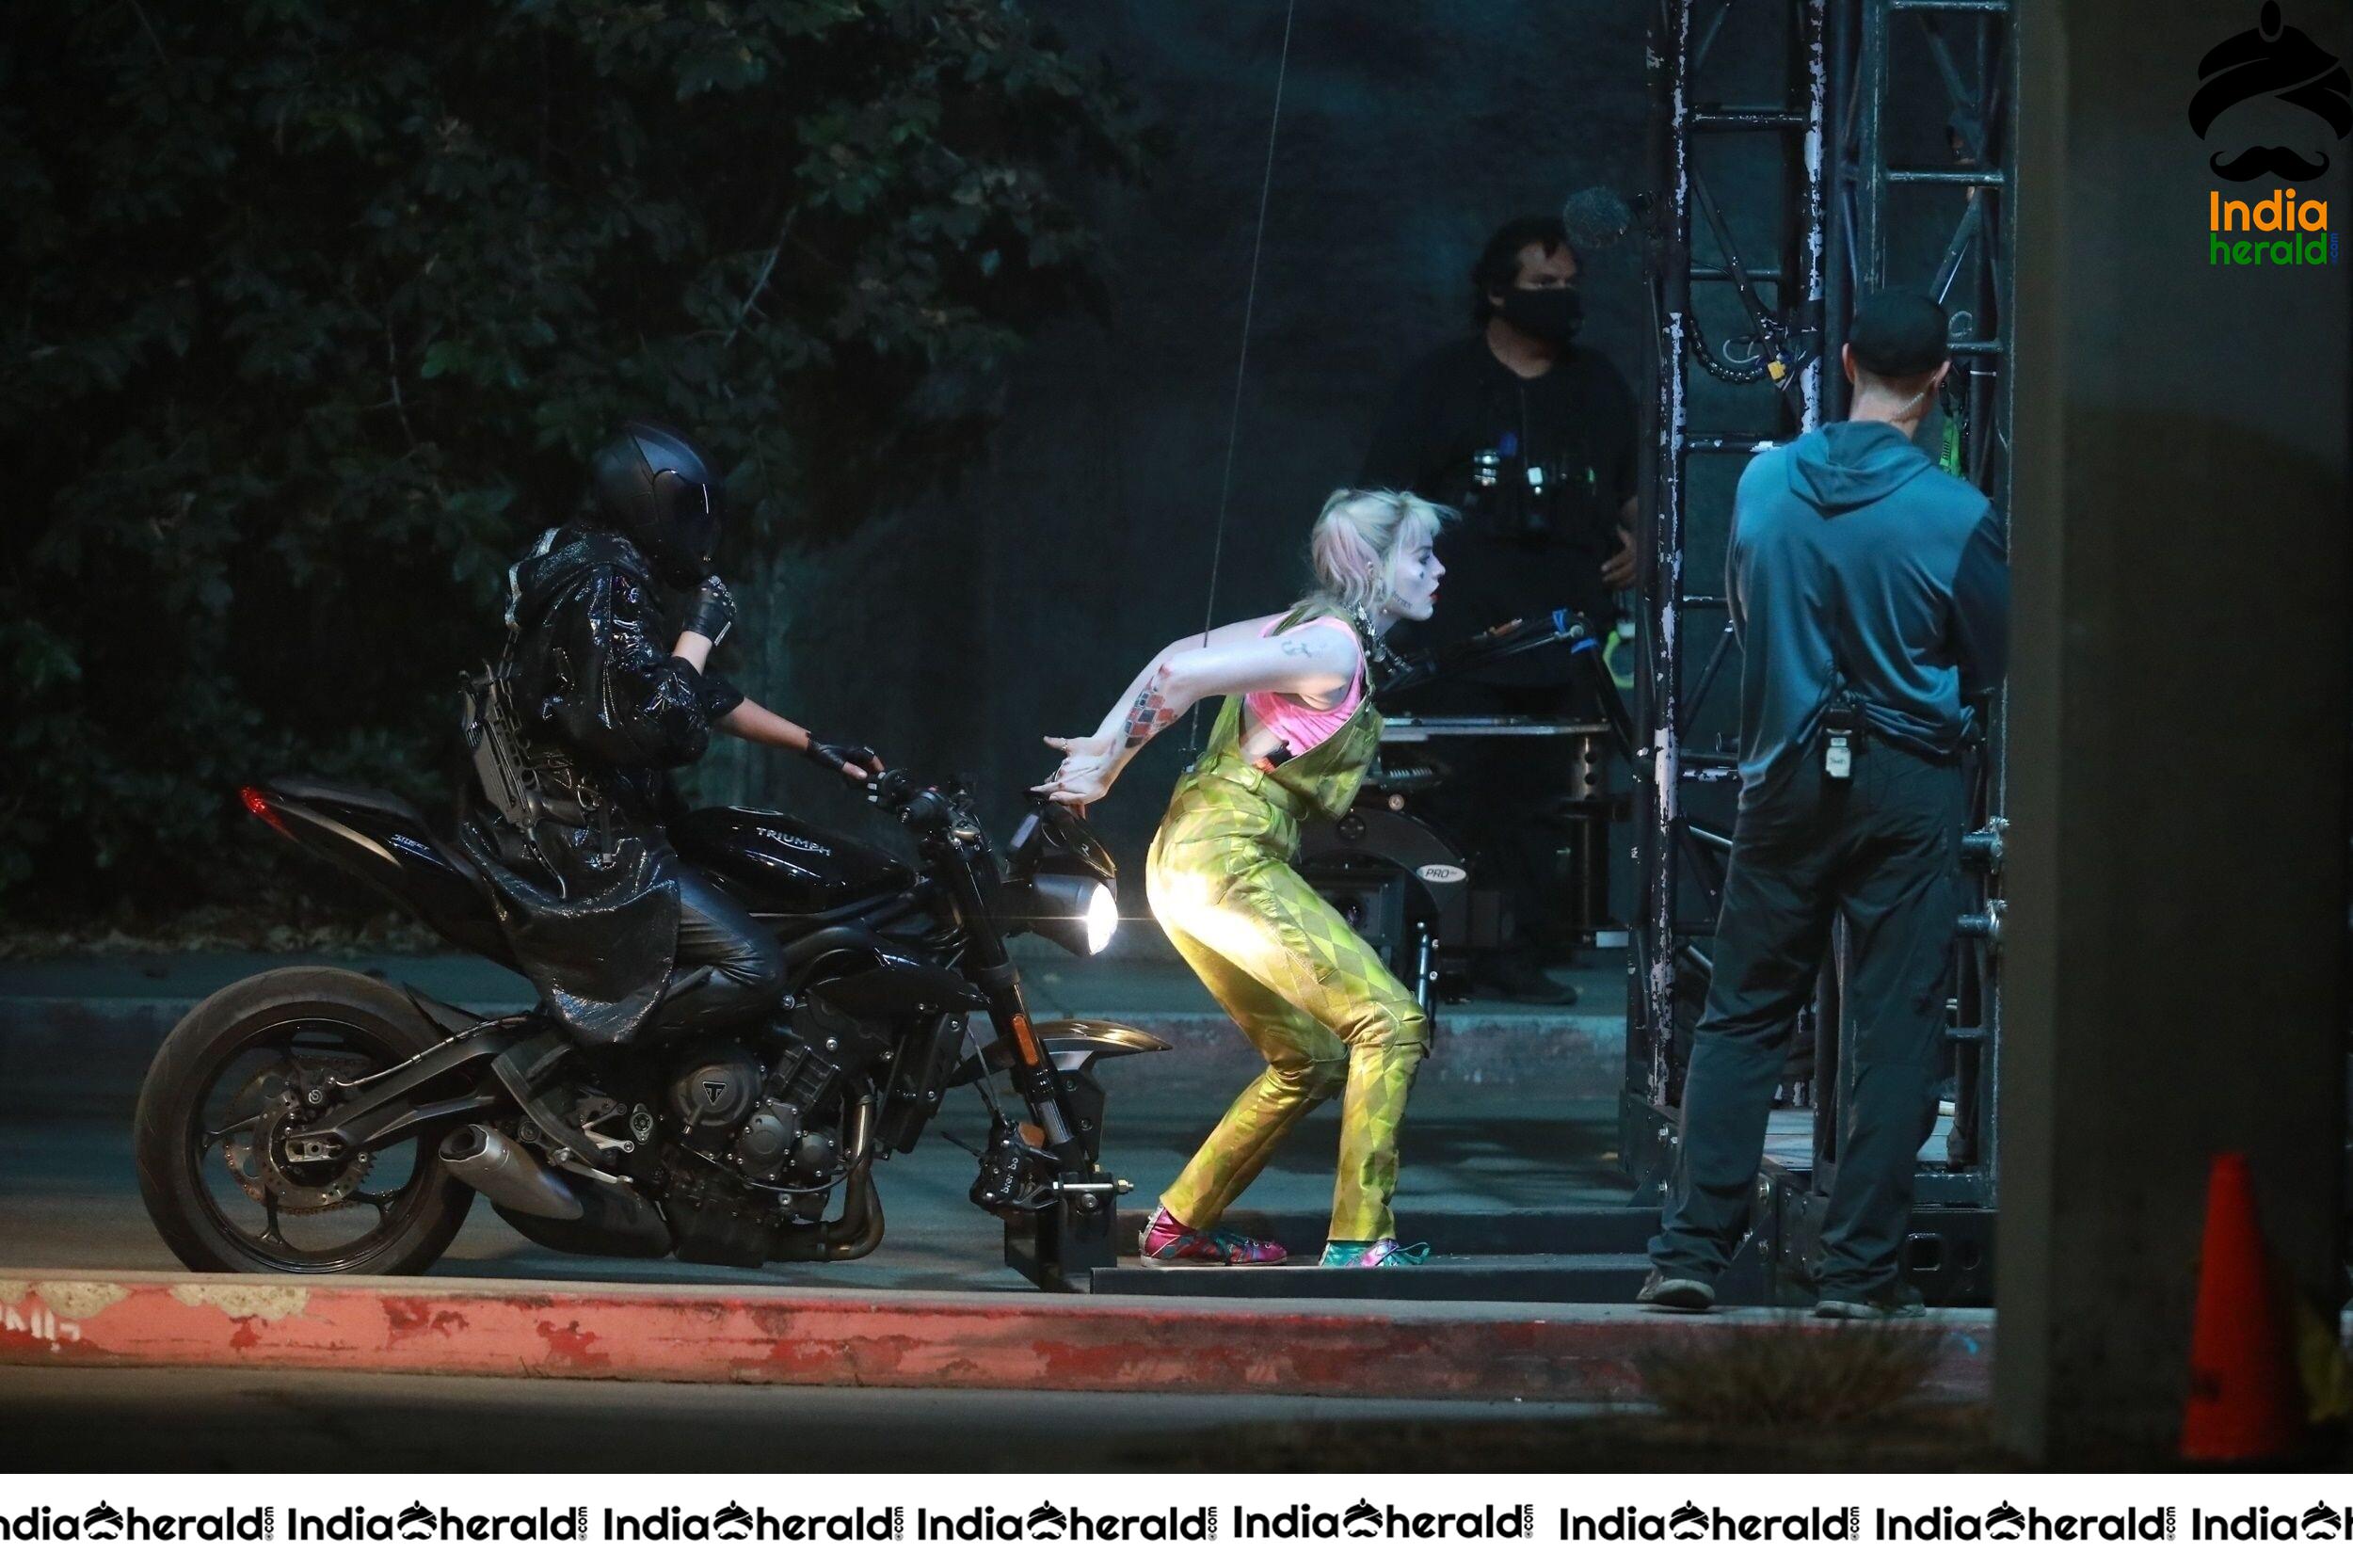 India Herald Exclusive Margot Robbie On The Sets Of Birds Of Prey At LA Set 2